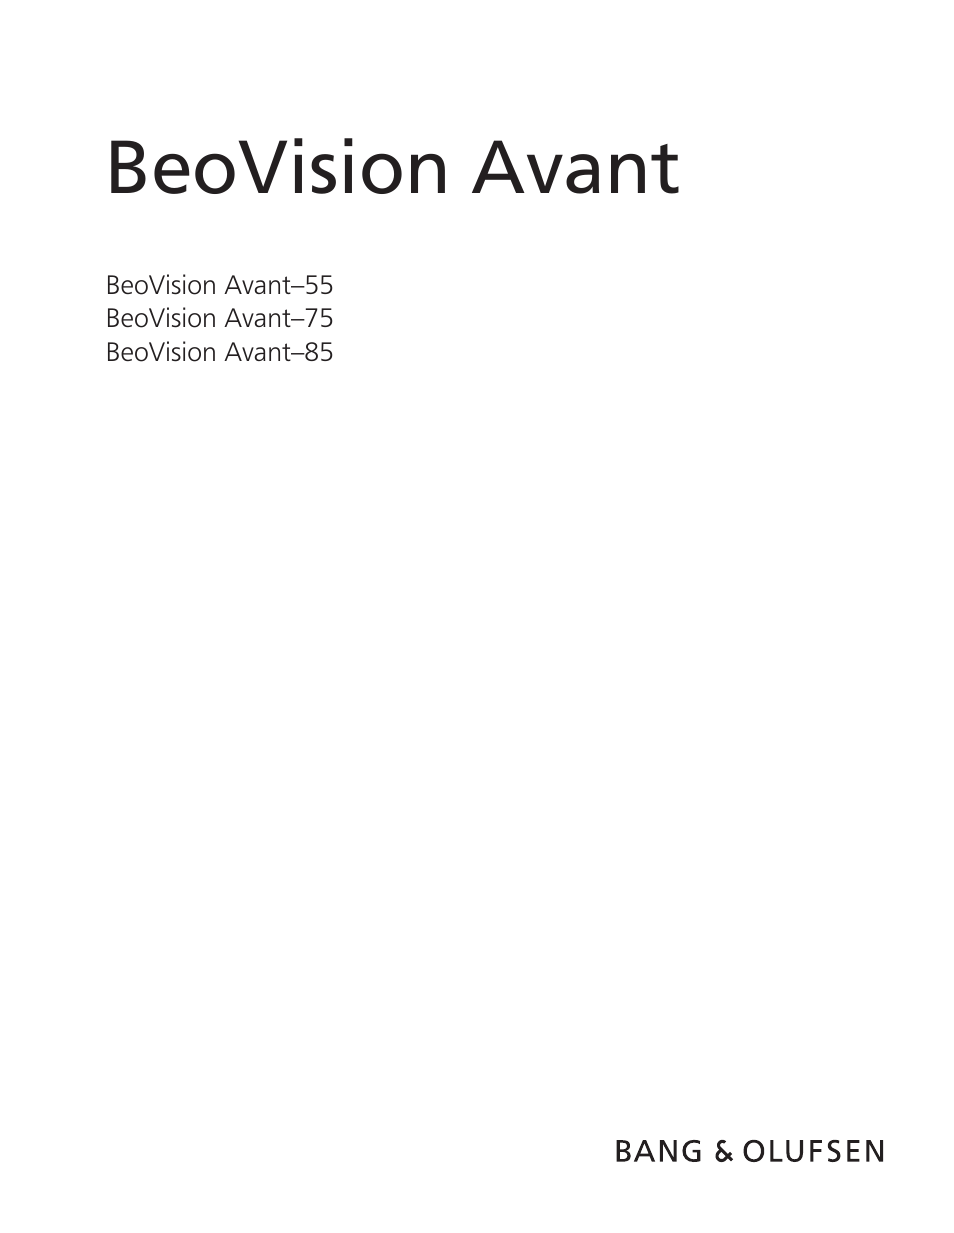 Инструкция по эксплуатации Bang & Olufsen BeoVision Avant - User Guide | 83 страницы